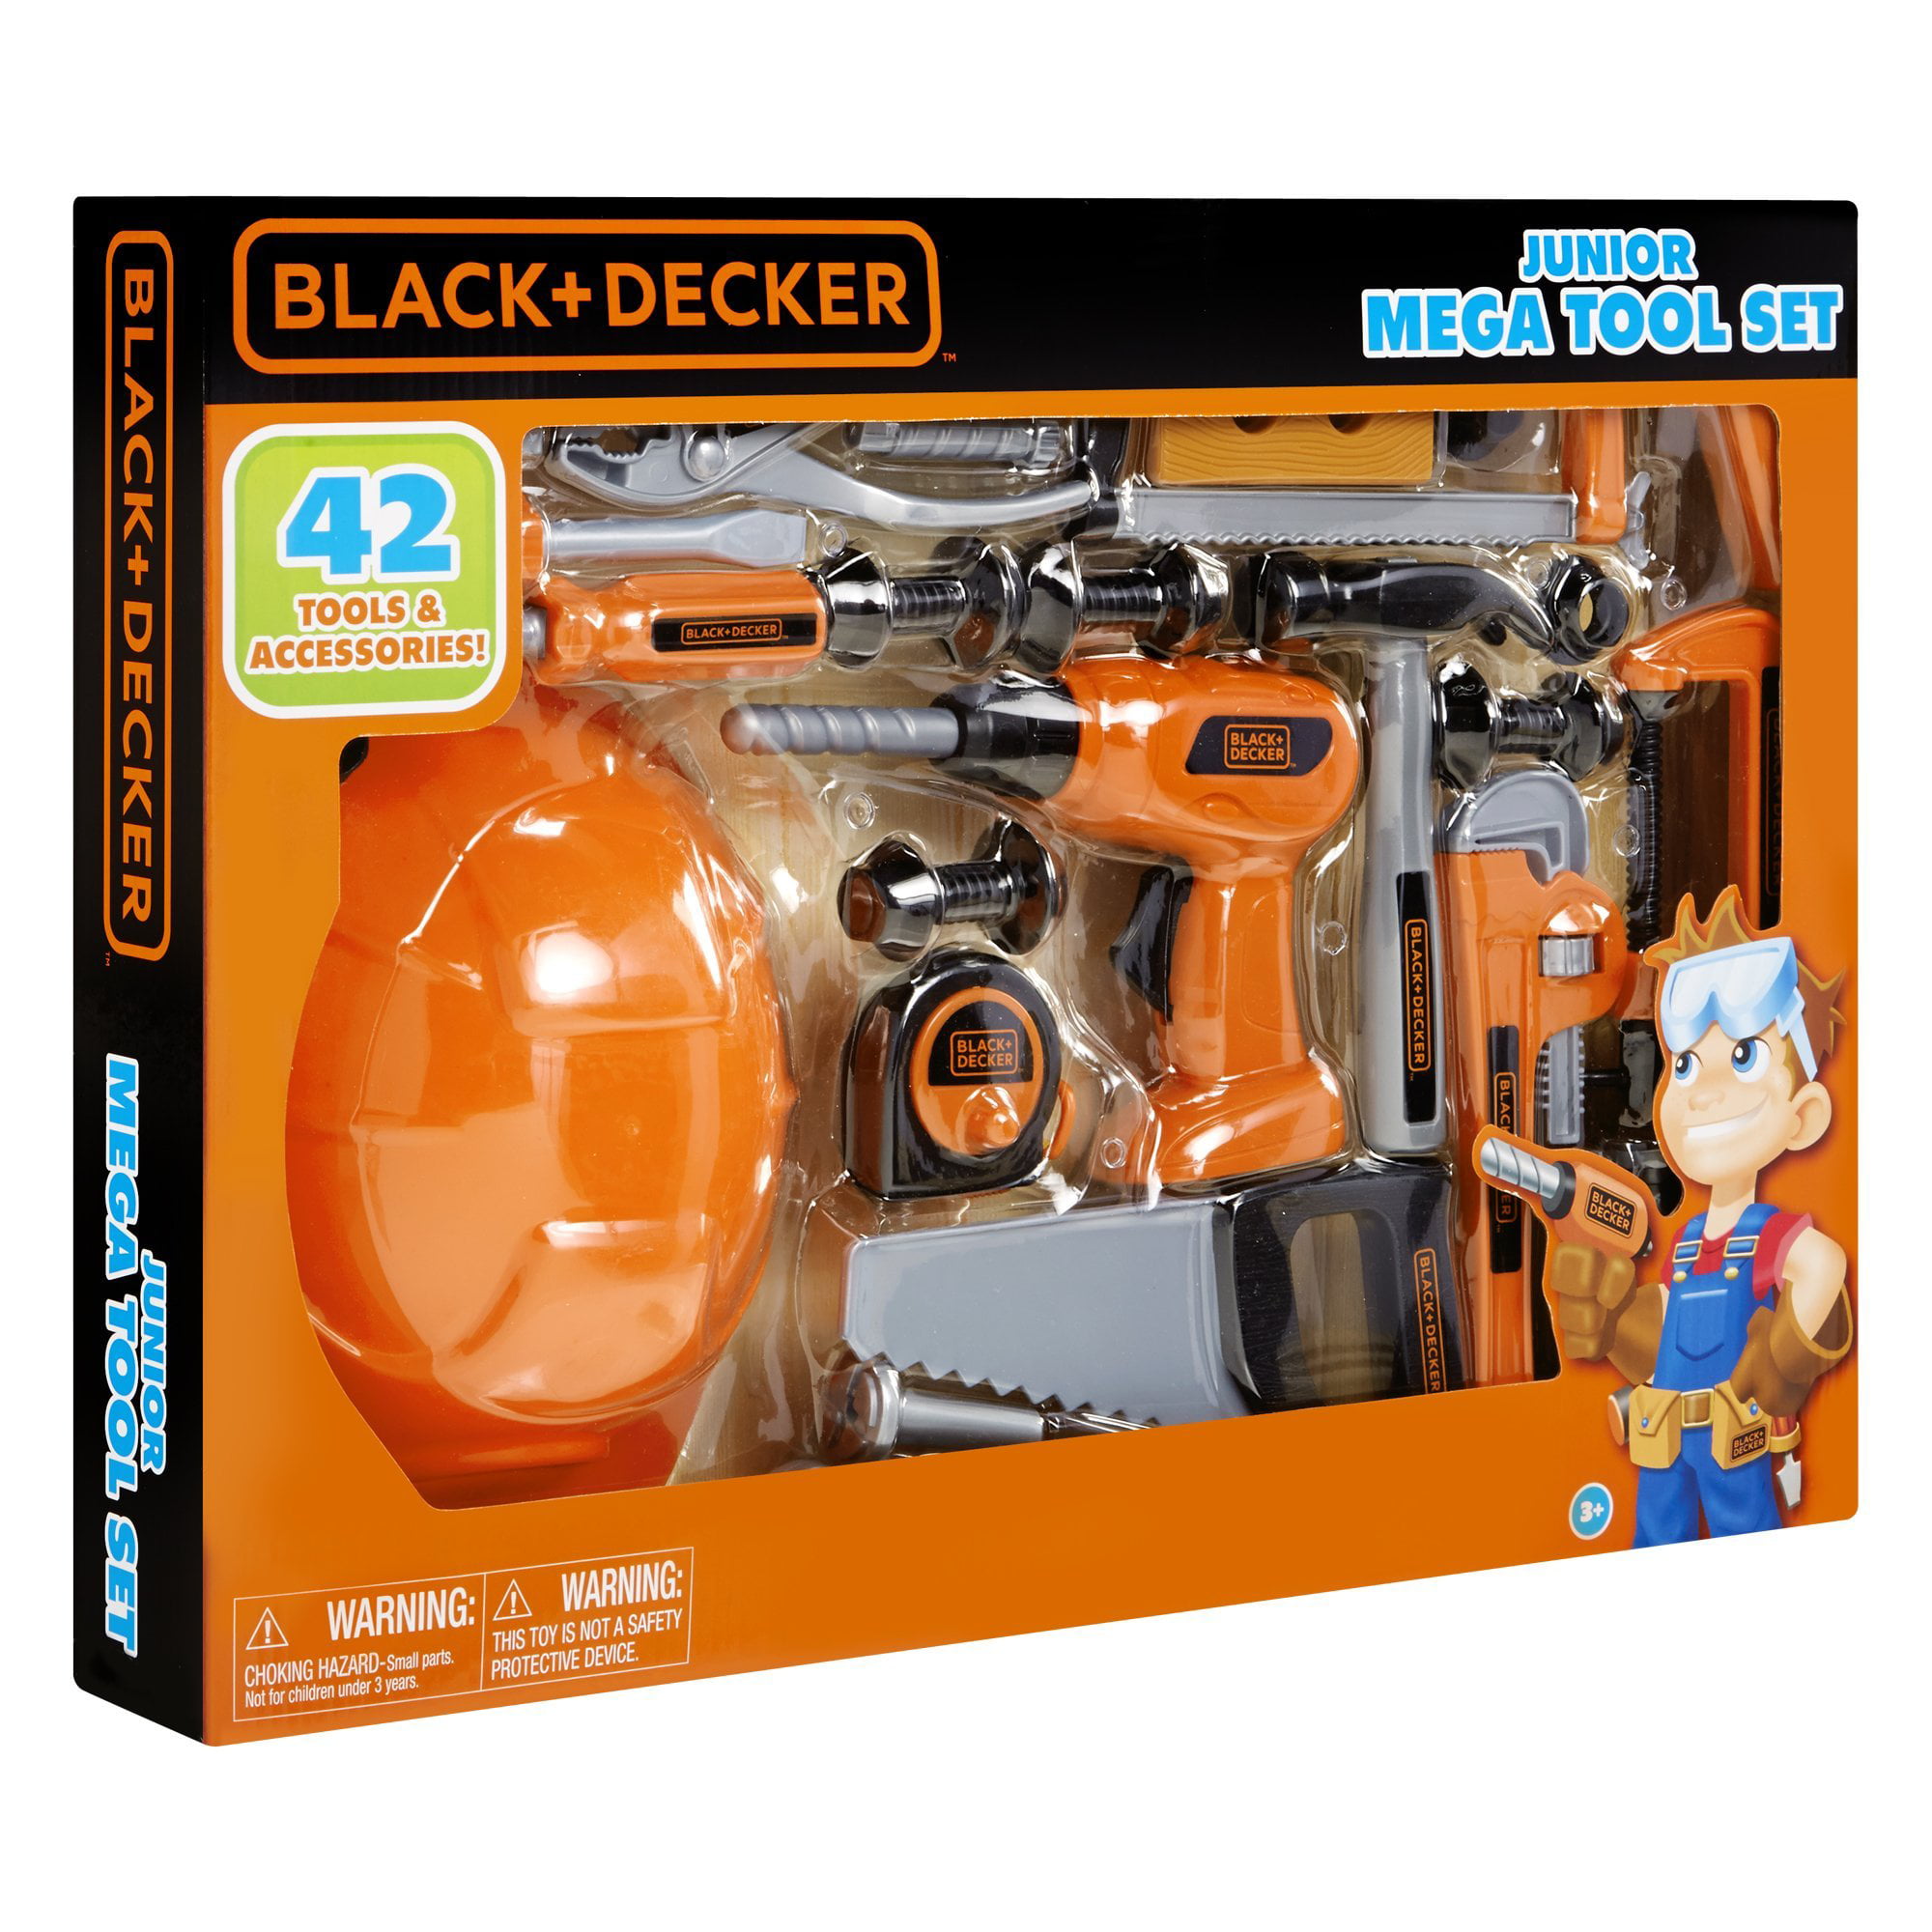 BLACK+DECKER Junior Deluxe Tool Play Set - 85pc : : Toys